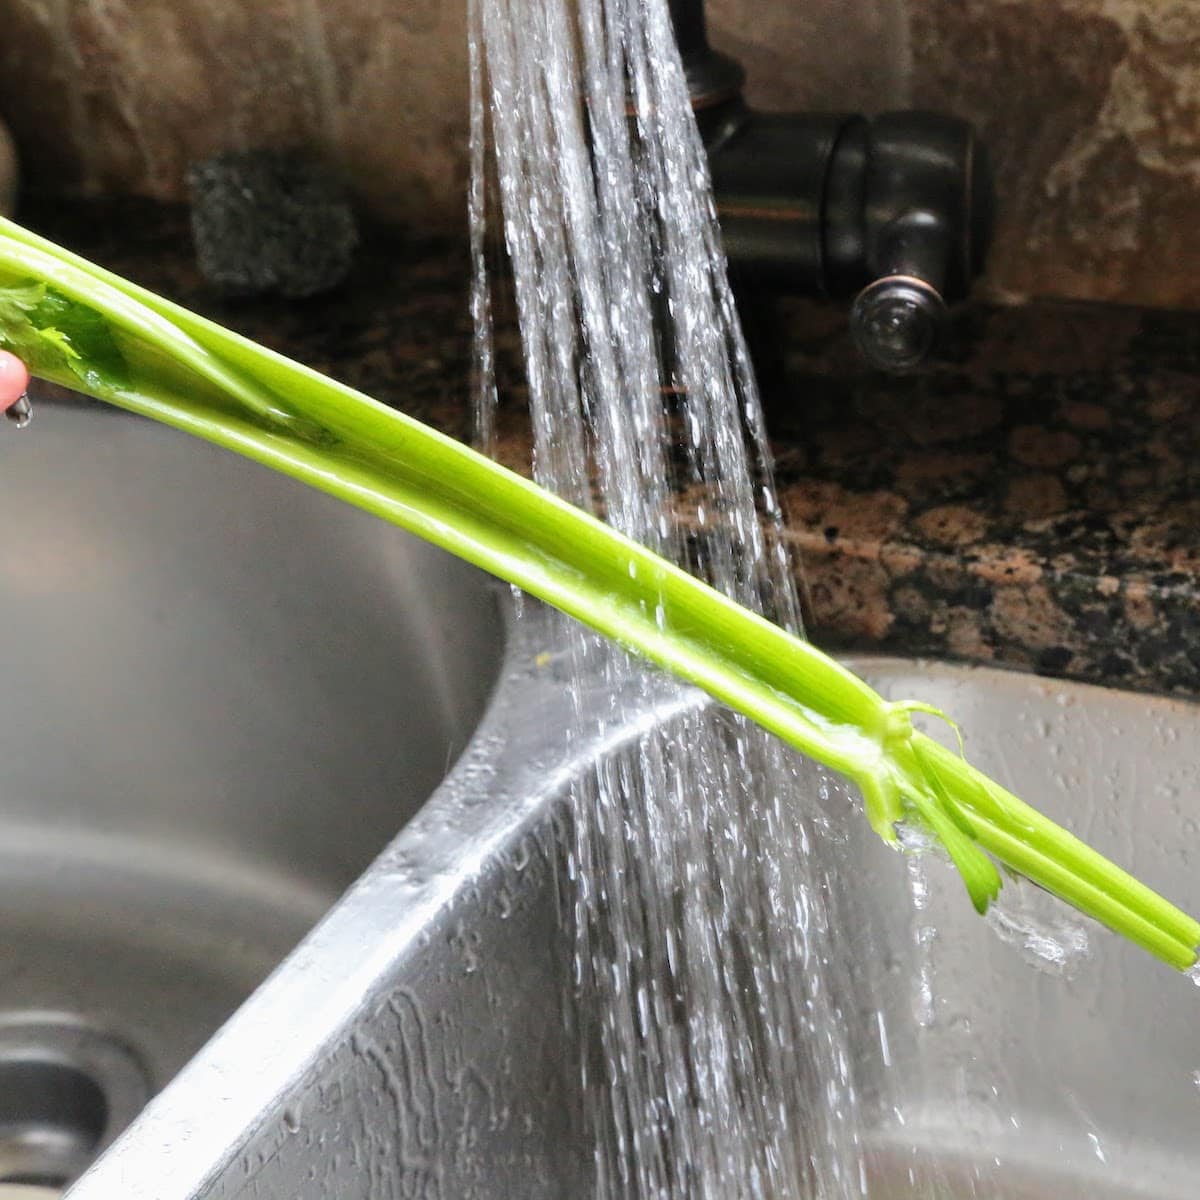 cleaning celery in sink